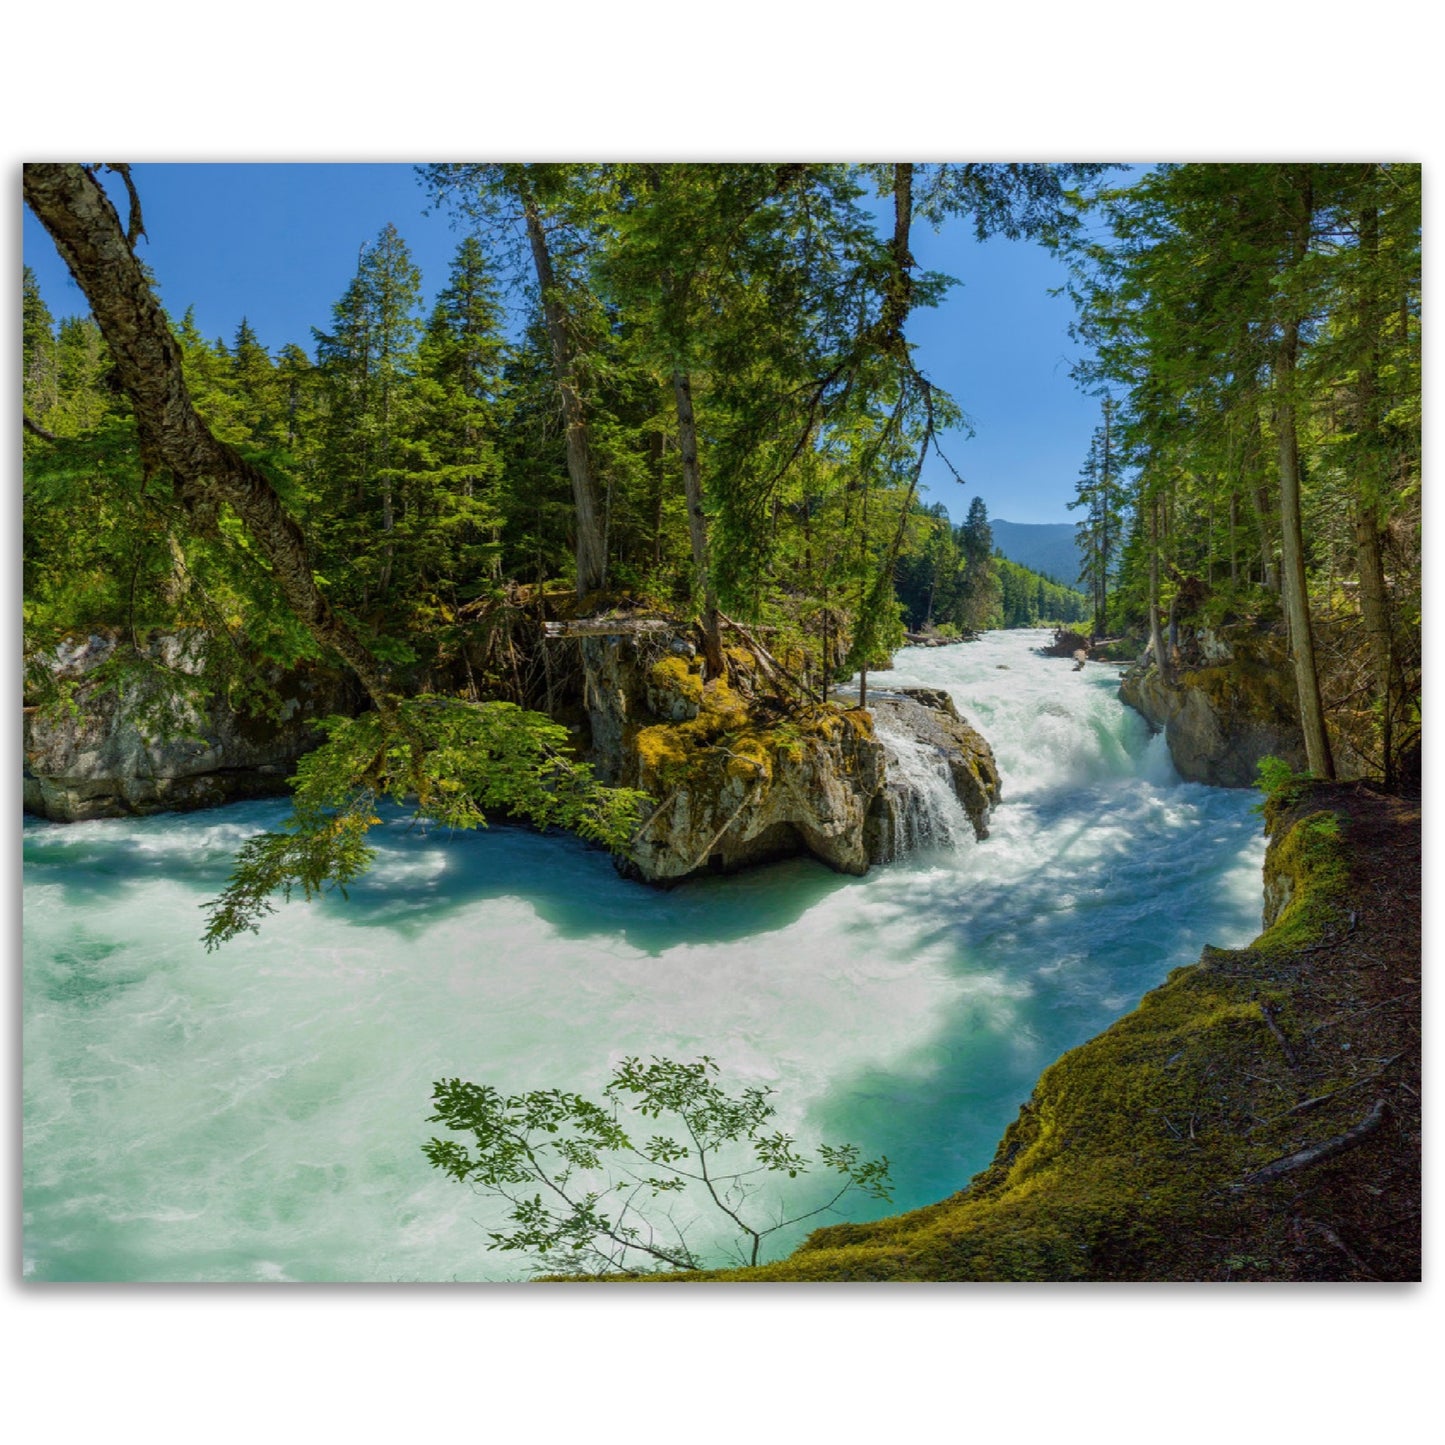 Cheakamus River Waterfall - Whistler, BC - Canadian Wilderness Aluminum / Metal Print